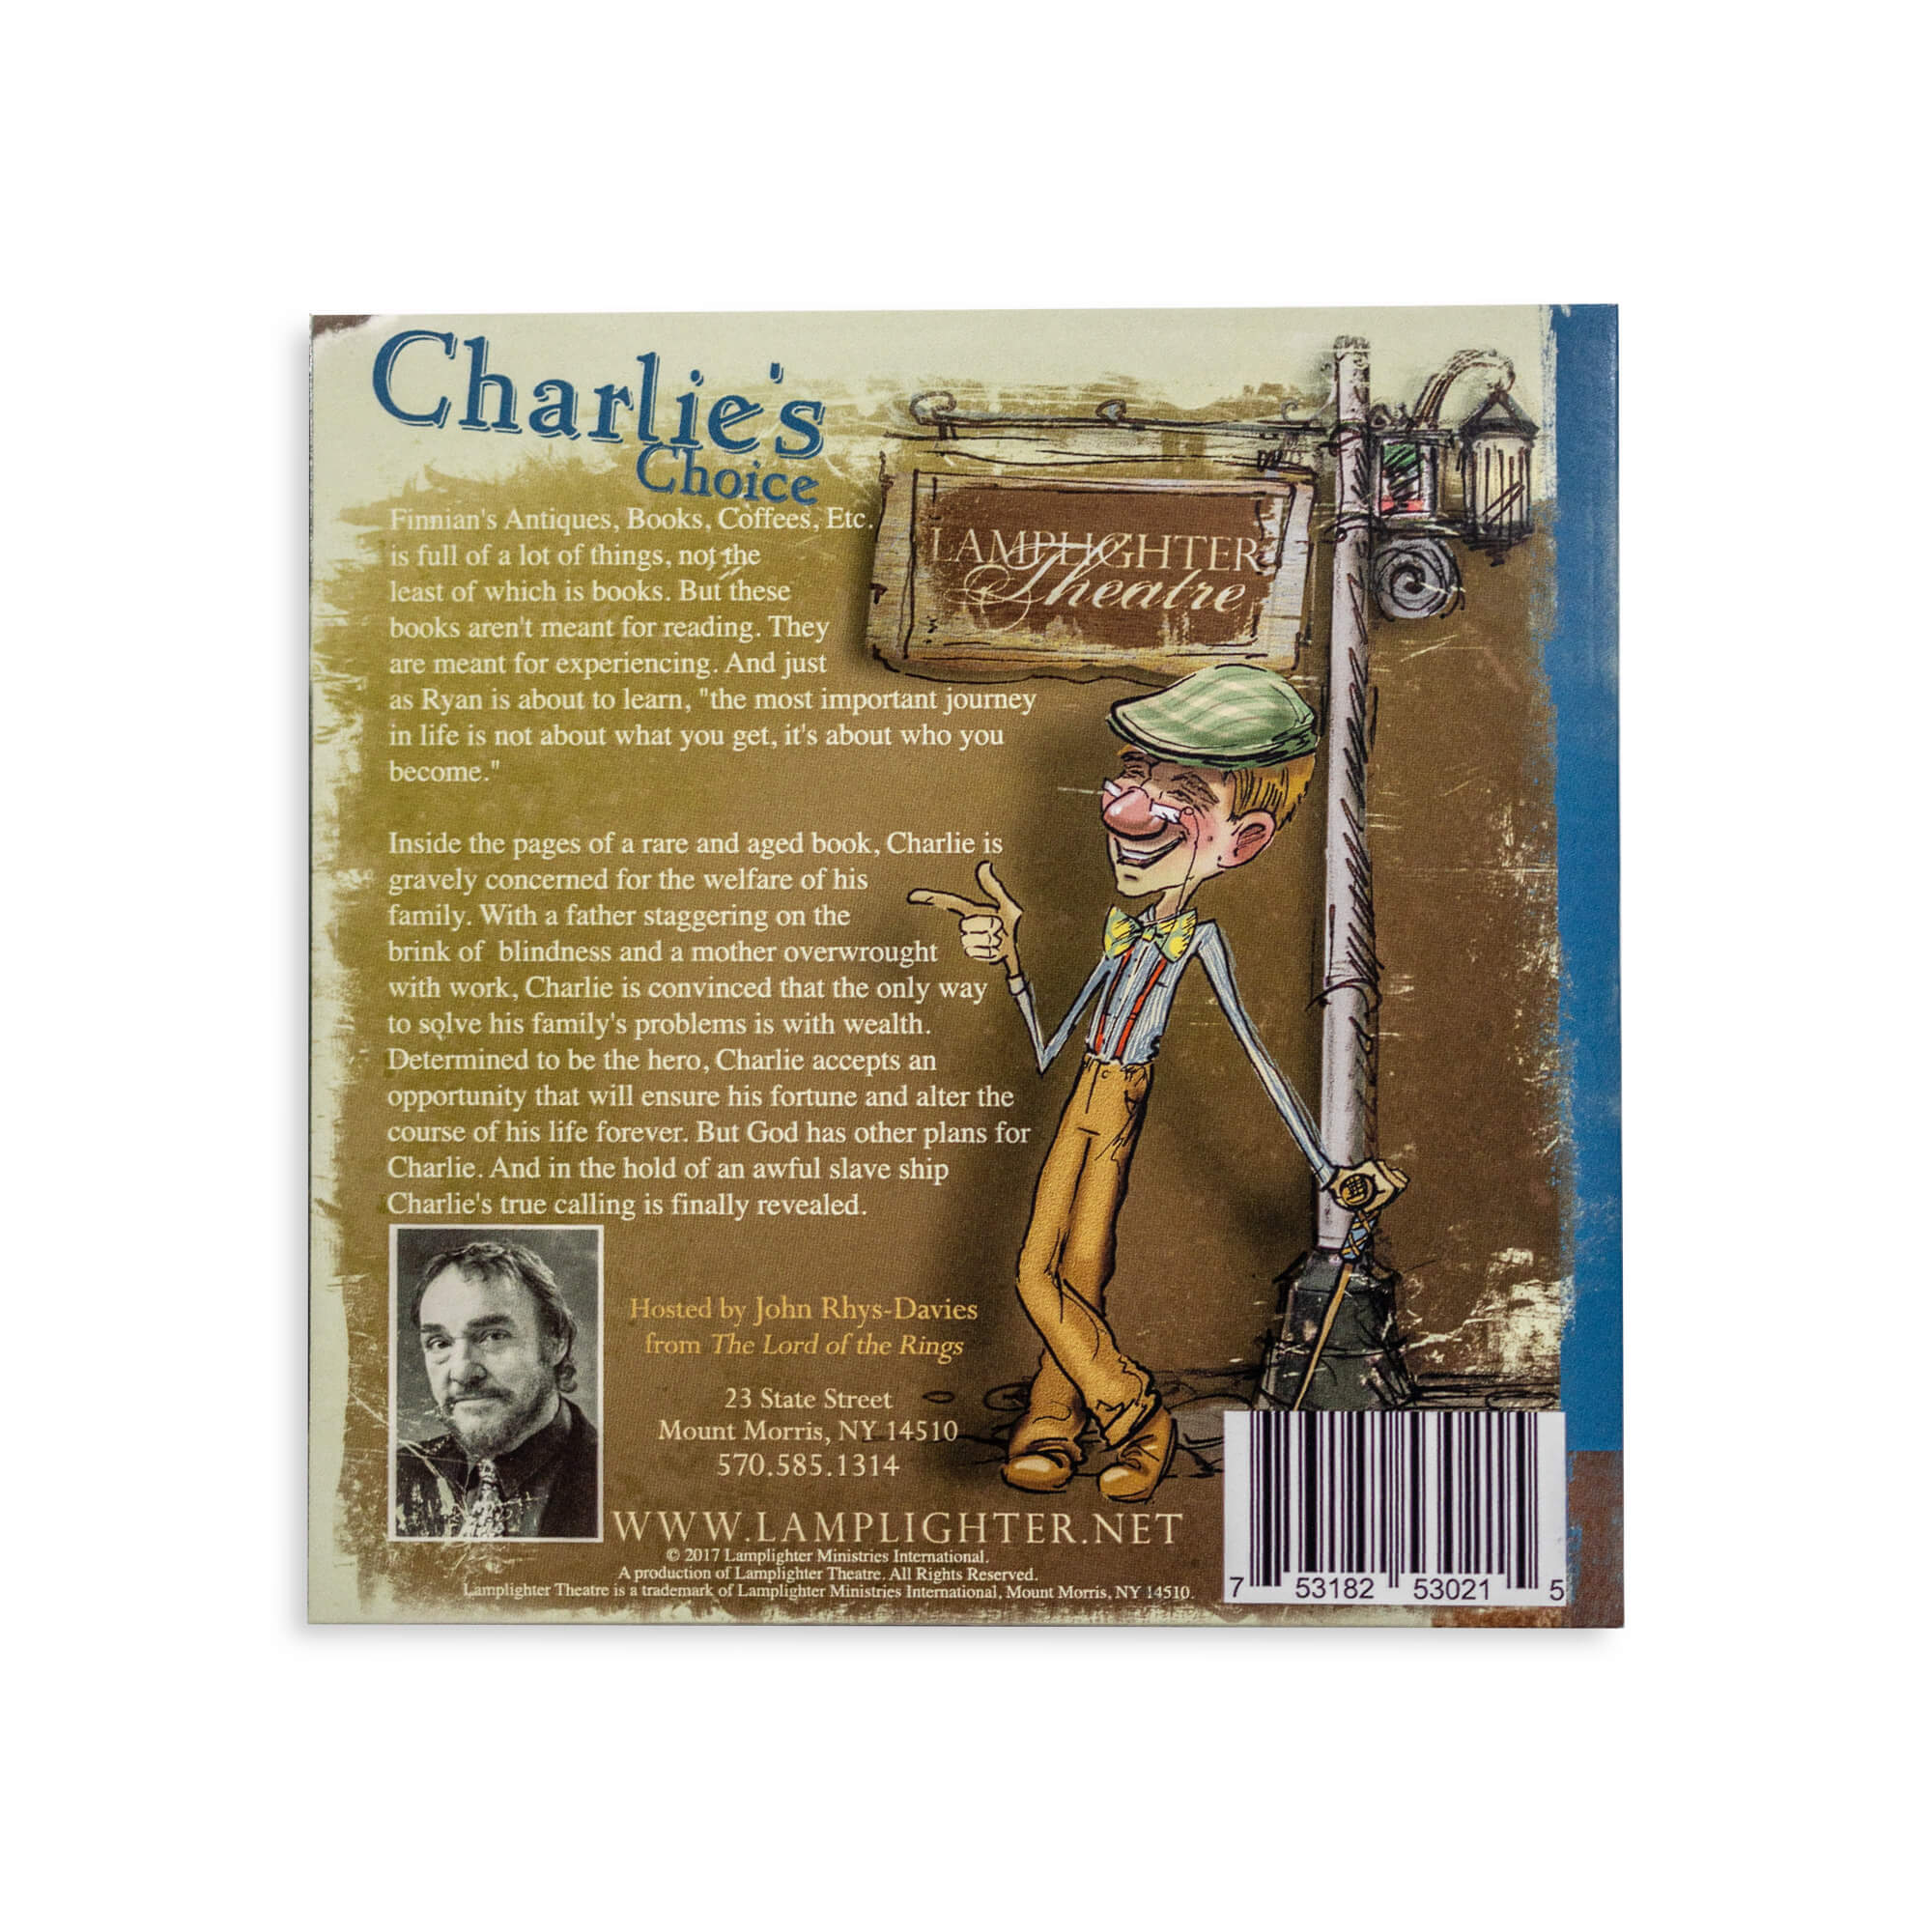 Charlie's Choice Audio drama